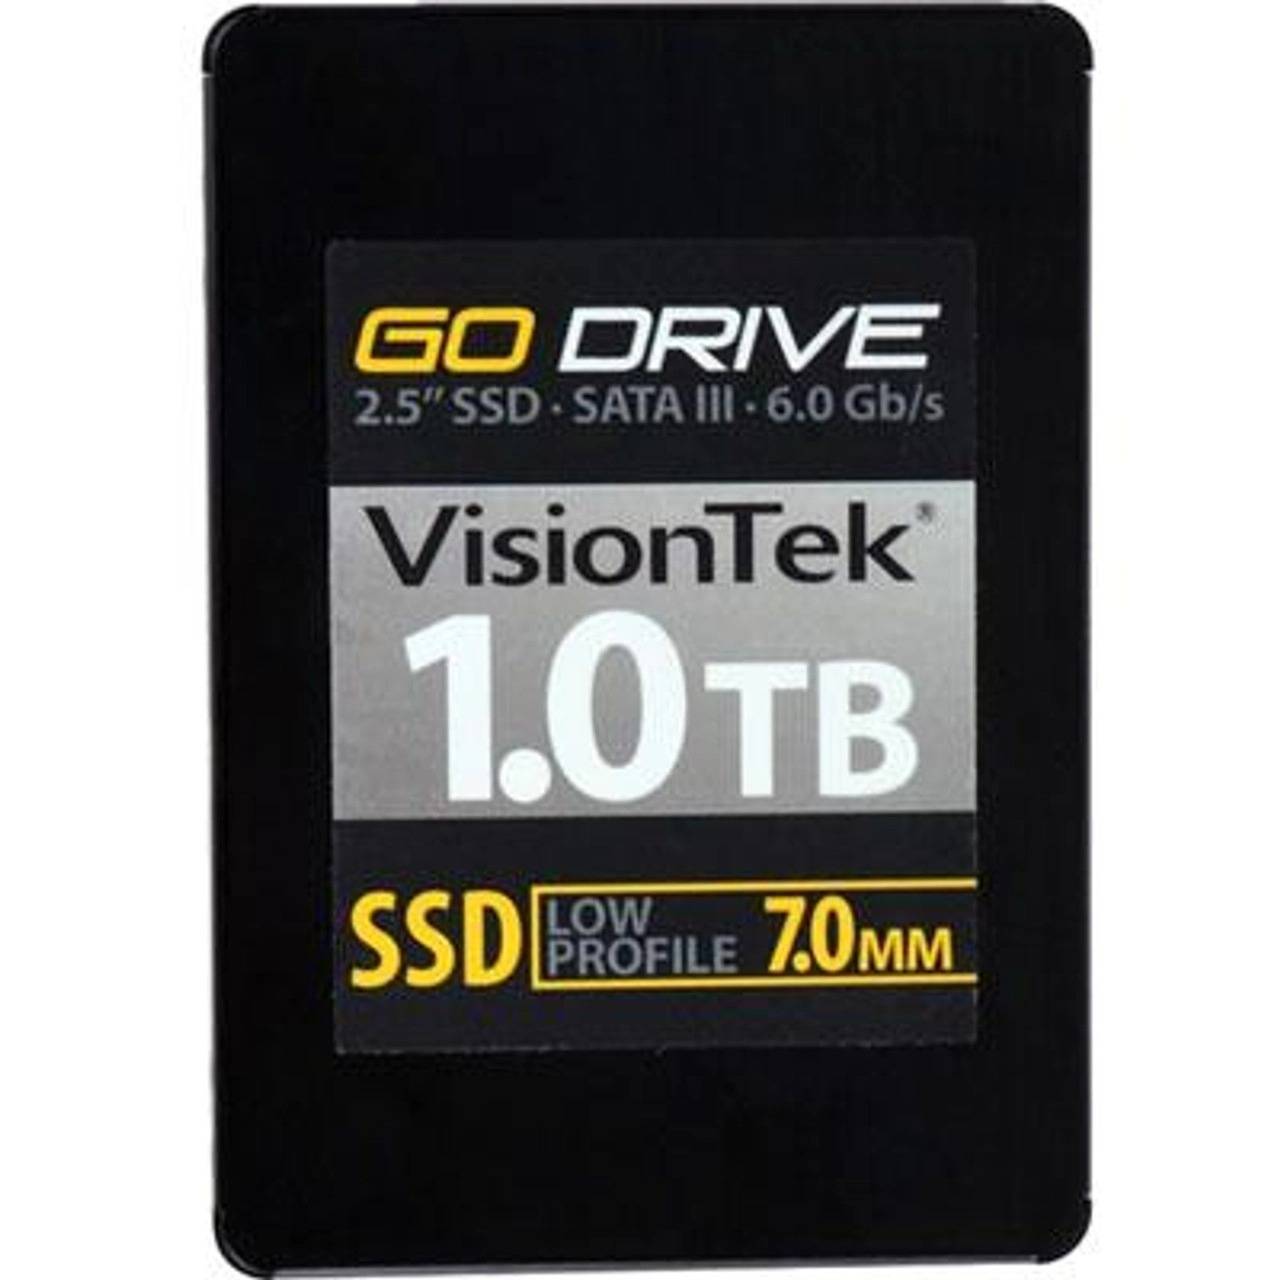 1TB SSD PRO HXS - ssd drive - SATA 6Gb/s Solid State Drive - 7mm/2.5-inch -  SSD - VisionTek